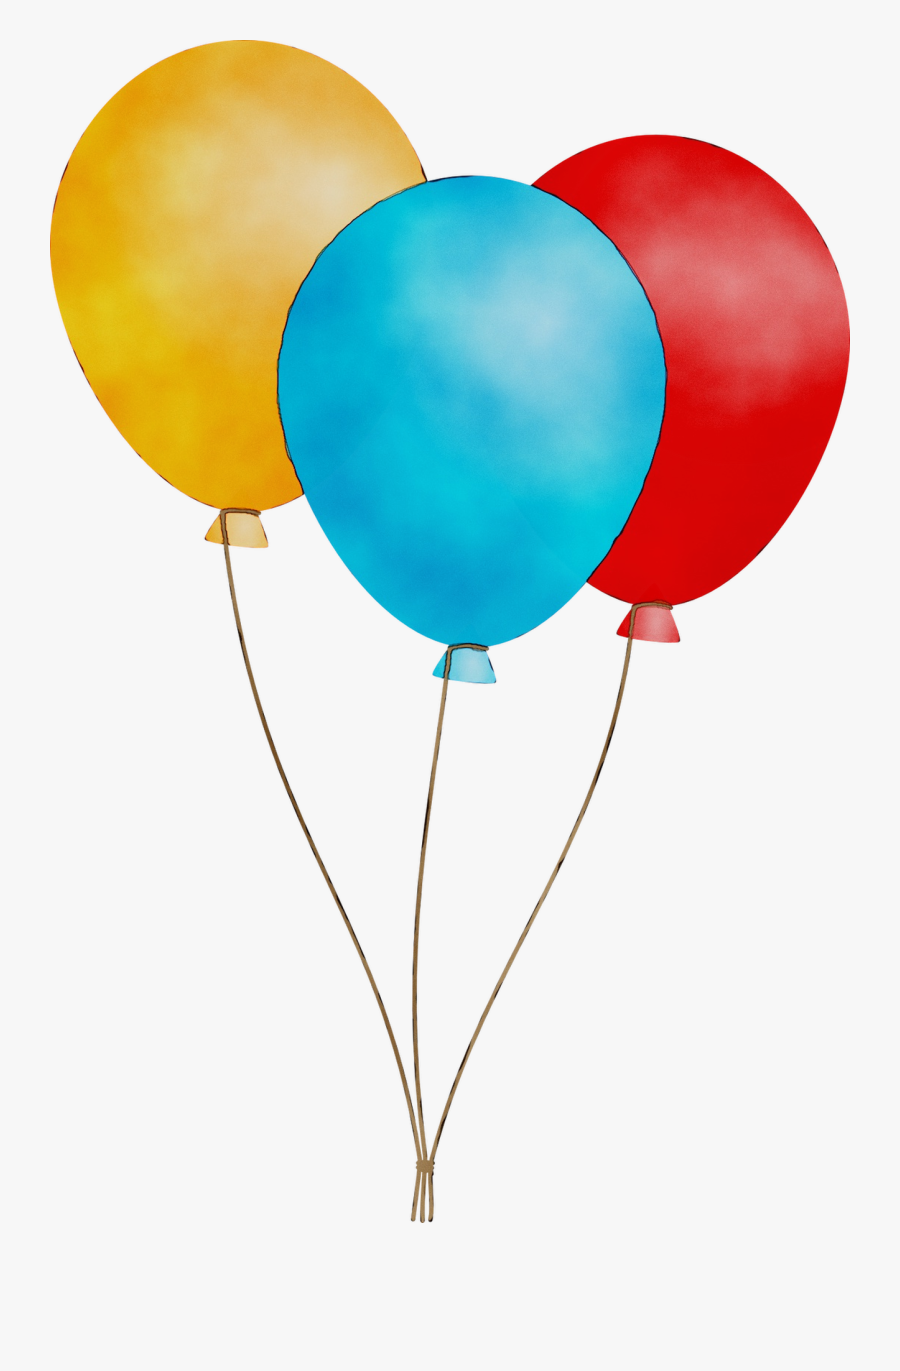 Transparent Balloon Portable Network Graphics Clip - Balloons Png, Transparent Clipart